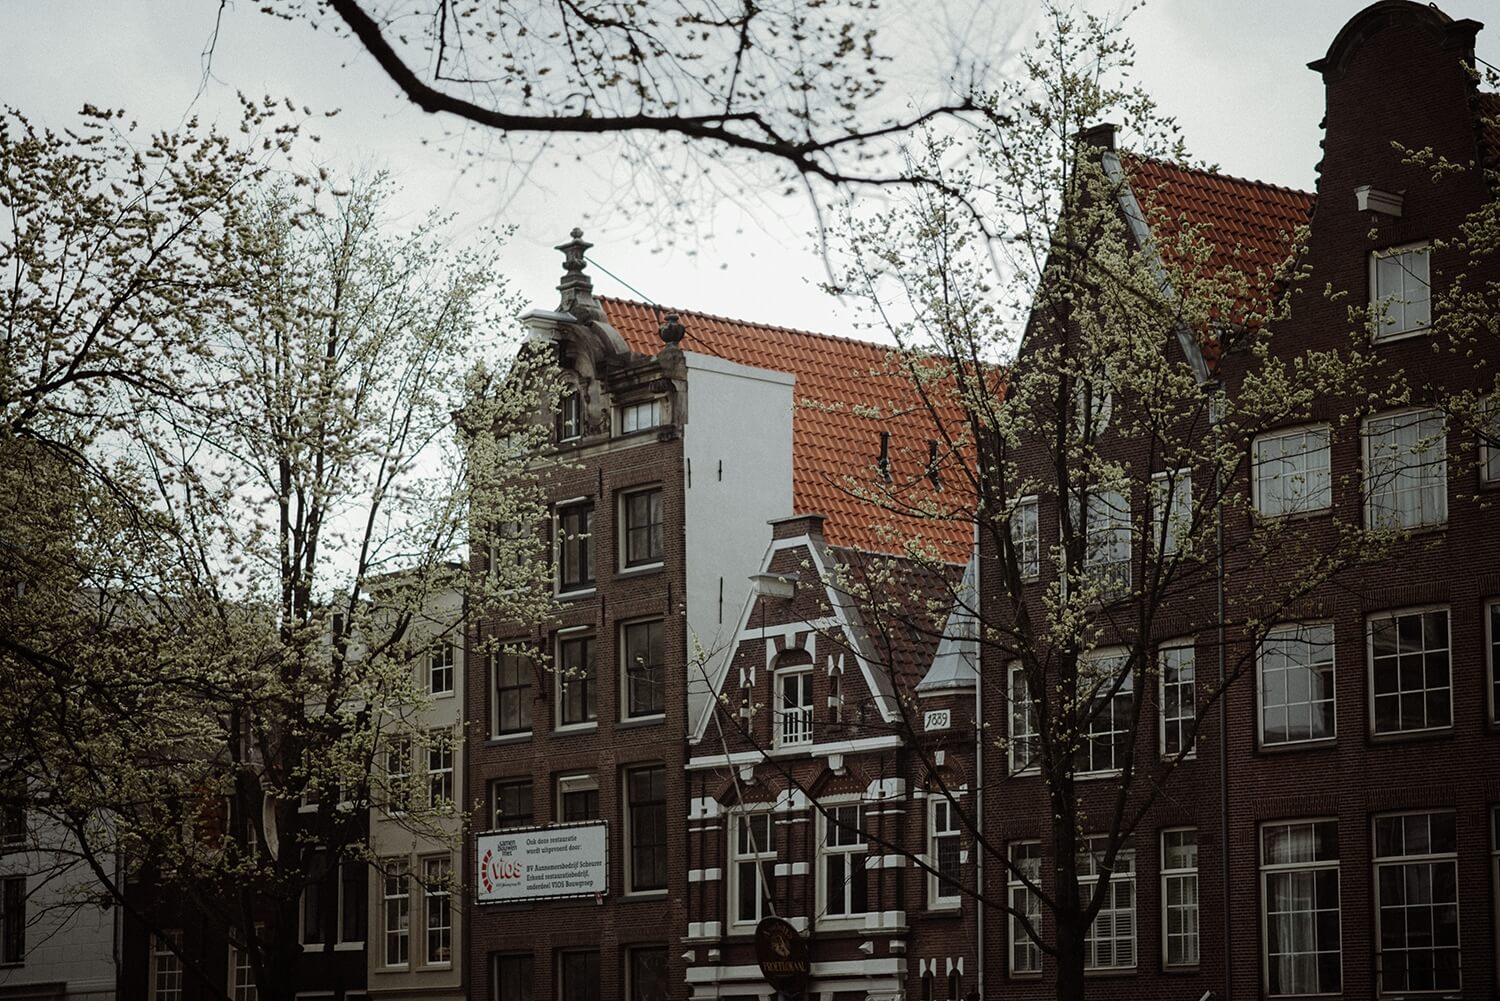 Amsterdam street